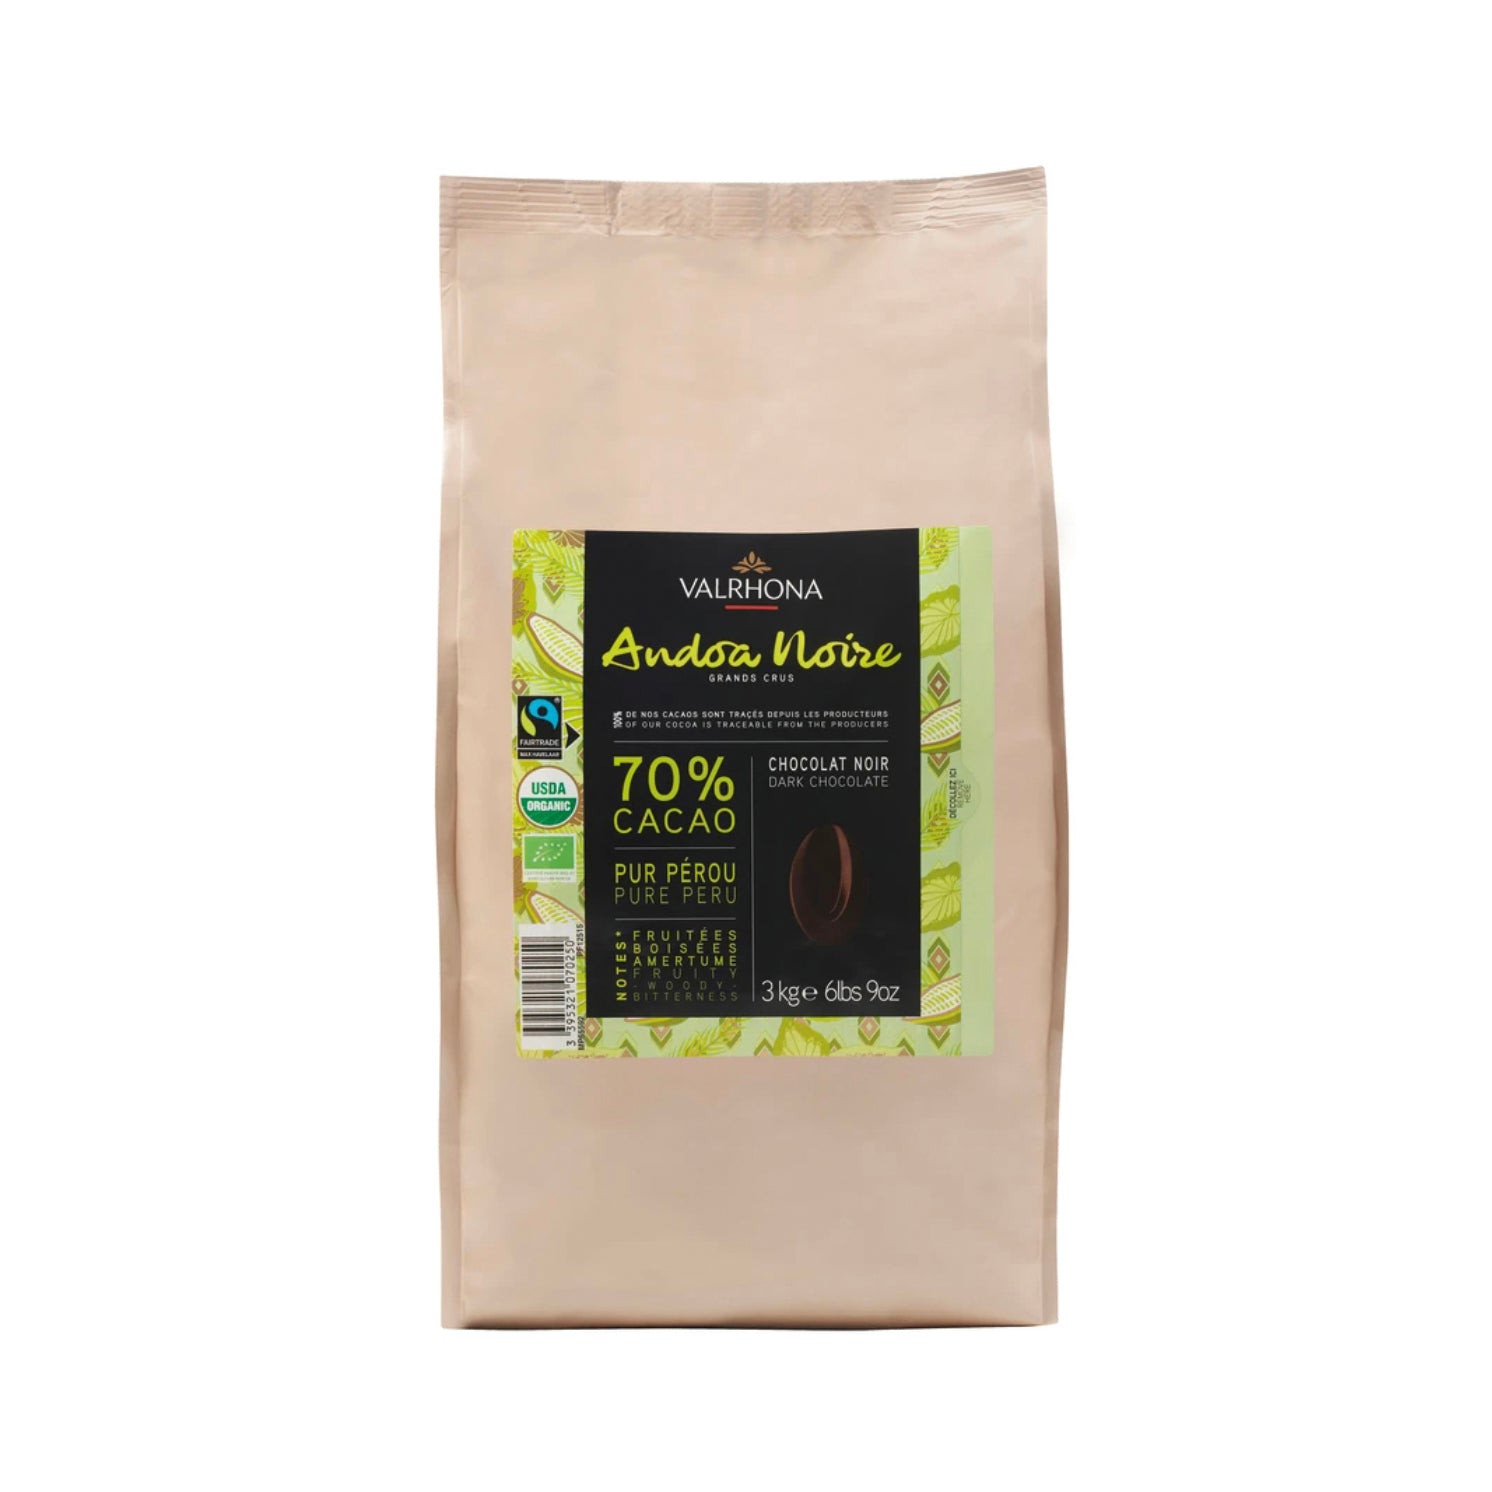 VALRHONA Andoa Noire 70%, Organic Dark Chocolate Couverture